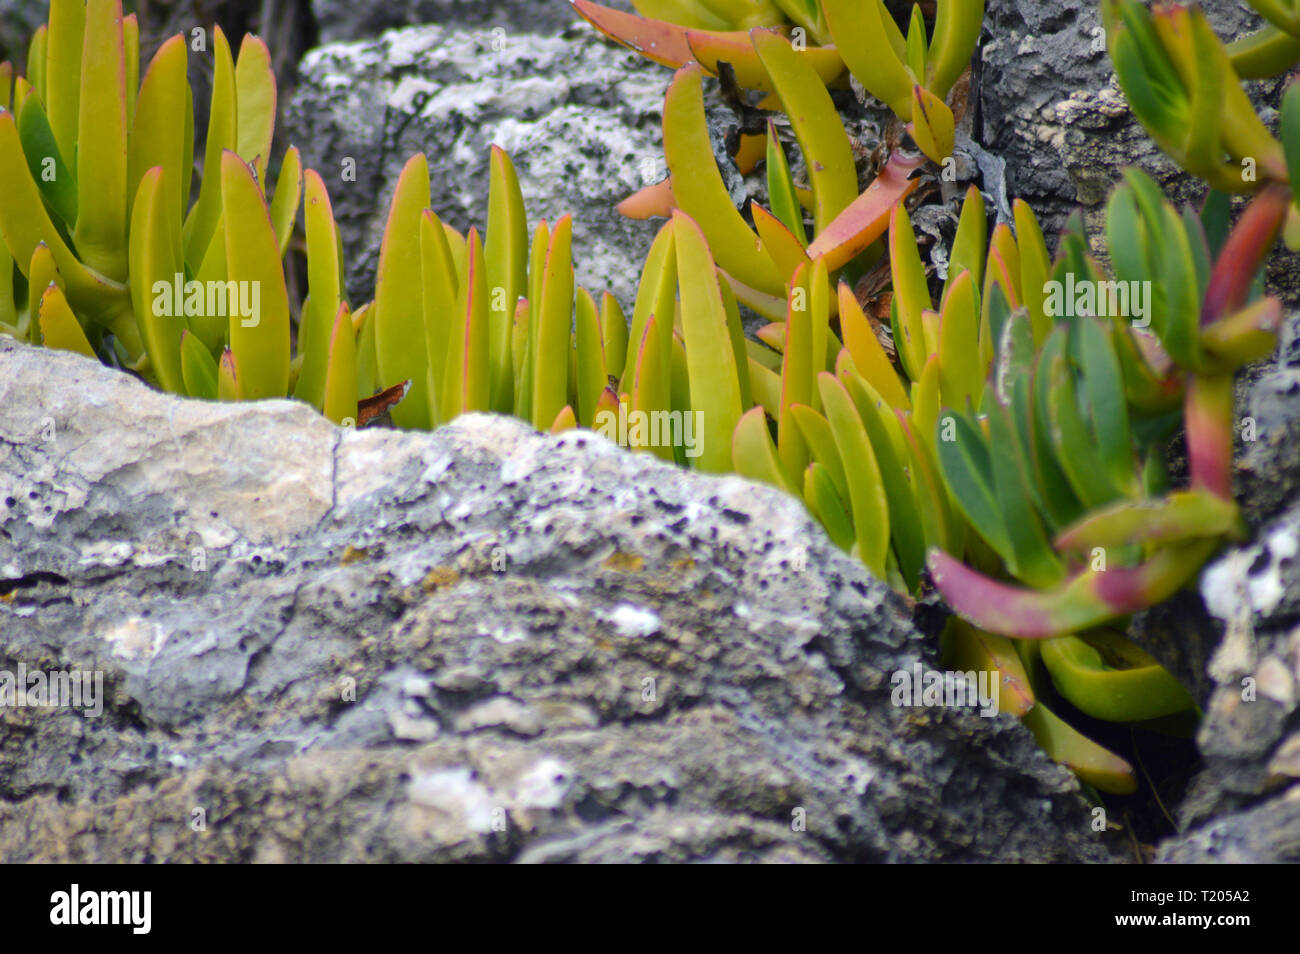 Carpobrotus rossii, karkalla plant on a rock Stock Photo